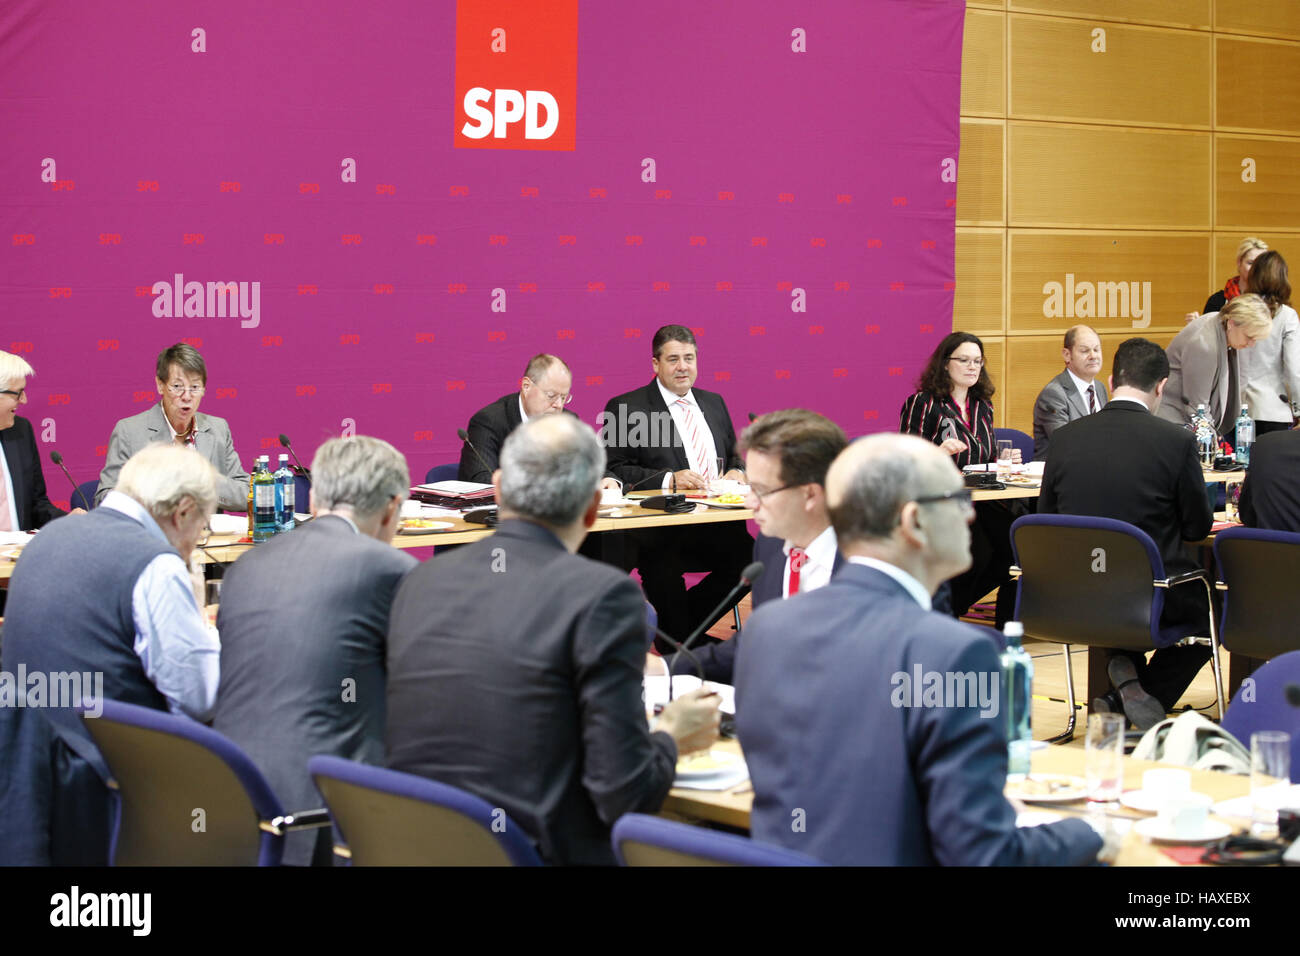 SPD party executive Meeting Stock Photo